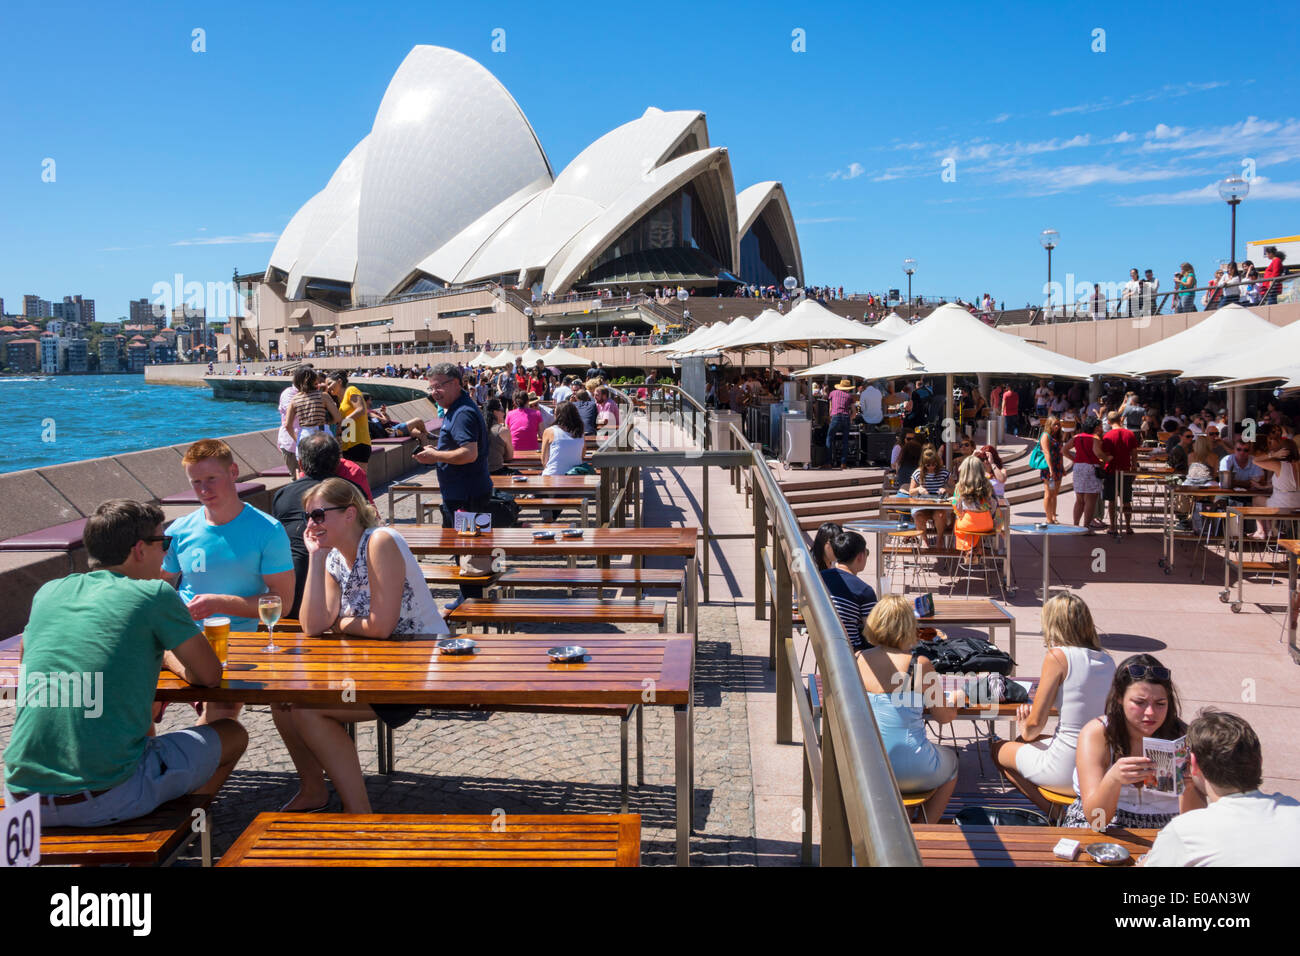 Sydney Australia,Sydney Harbour,harbor,East Circular Quay,Sydney Opera House,promenade,Opera Bar,restaurant restaurants food dining cafe cafes,al fres Stock Photo